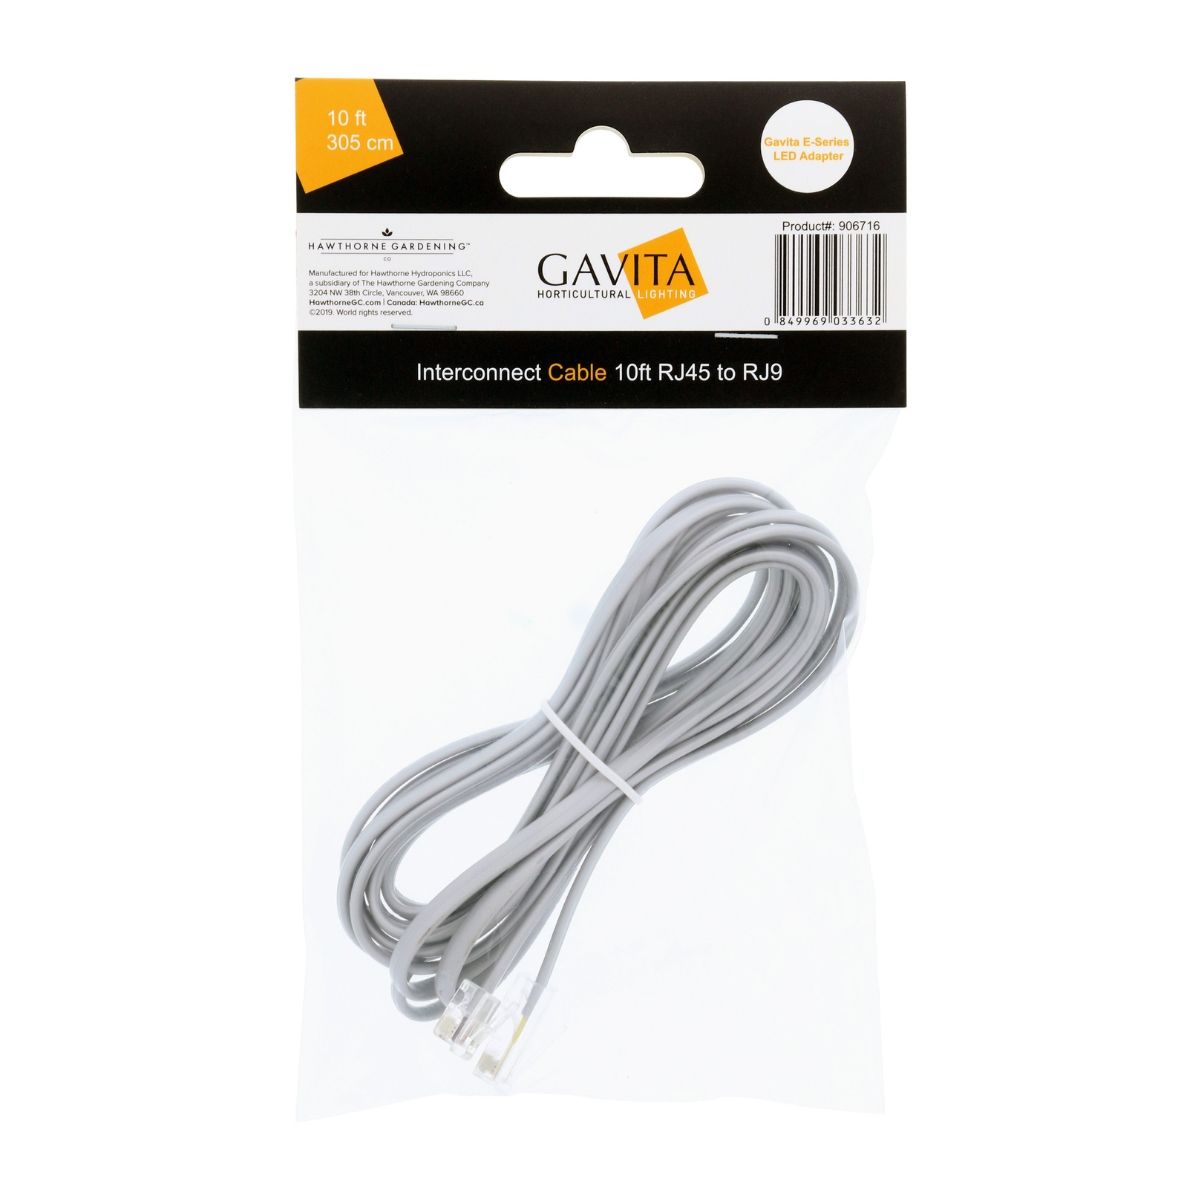 Gavita E-Series LED Adapters & Cables